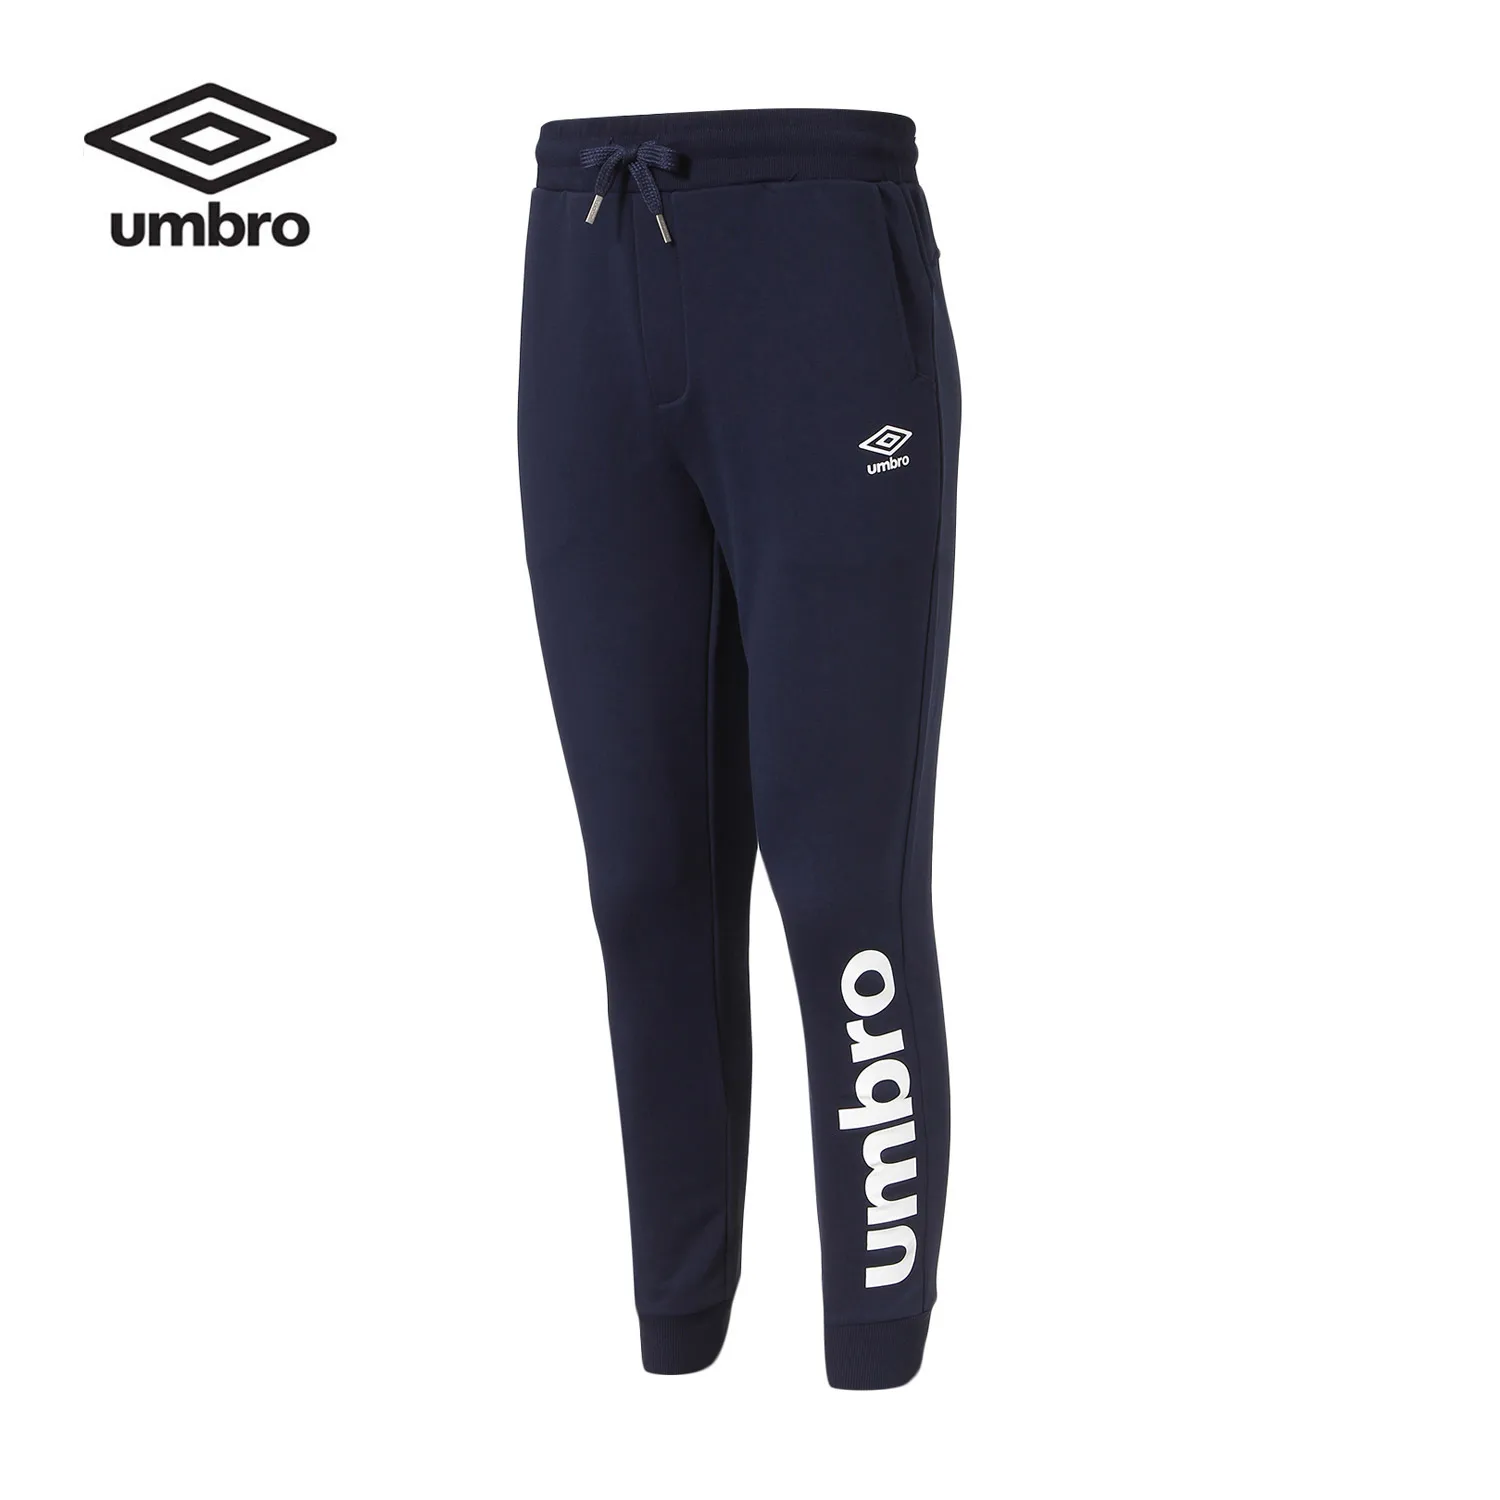 Umbro New Men Autumn Comfort Training Sports Pants Leisure Sportswear ...